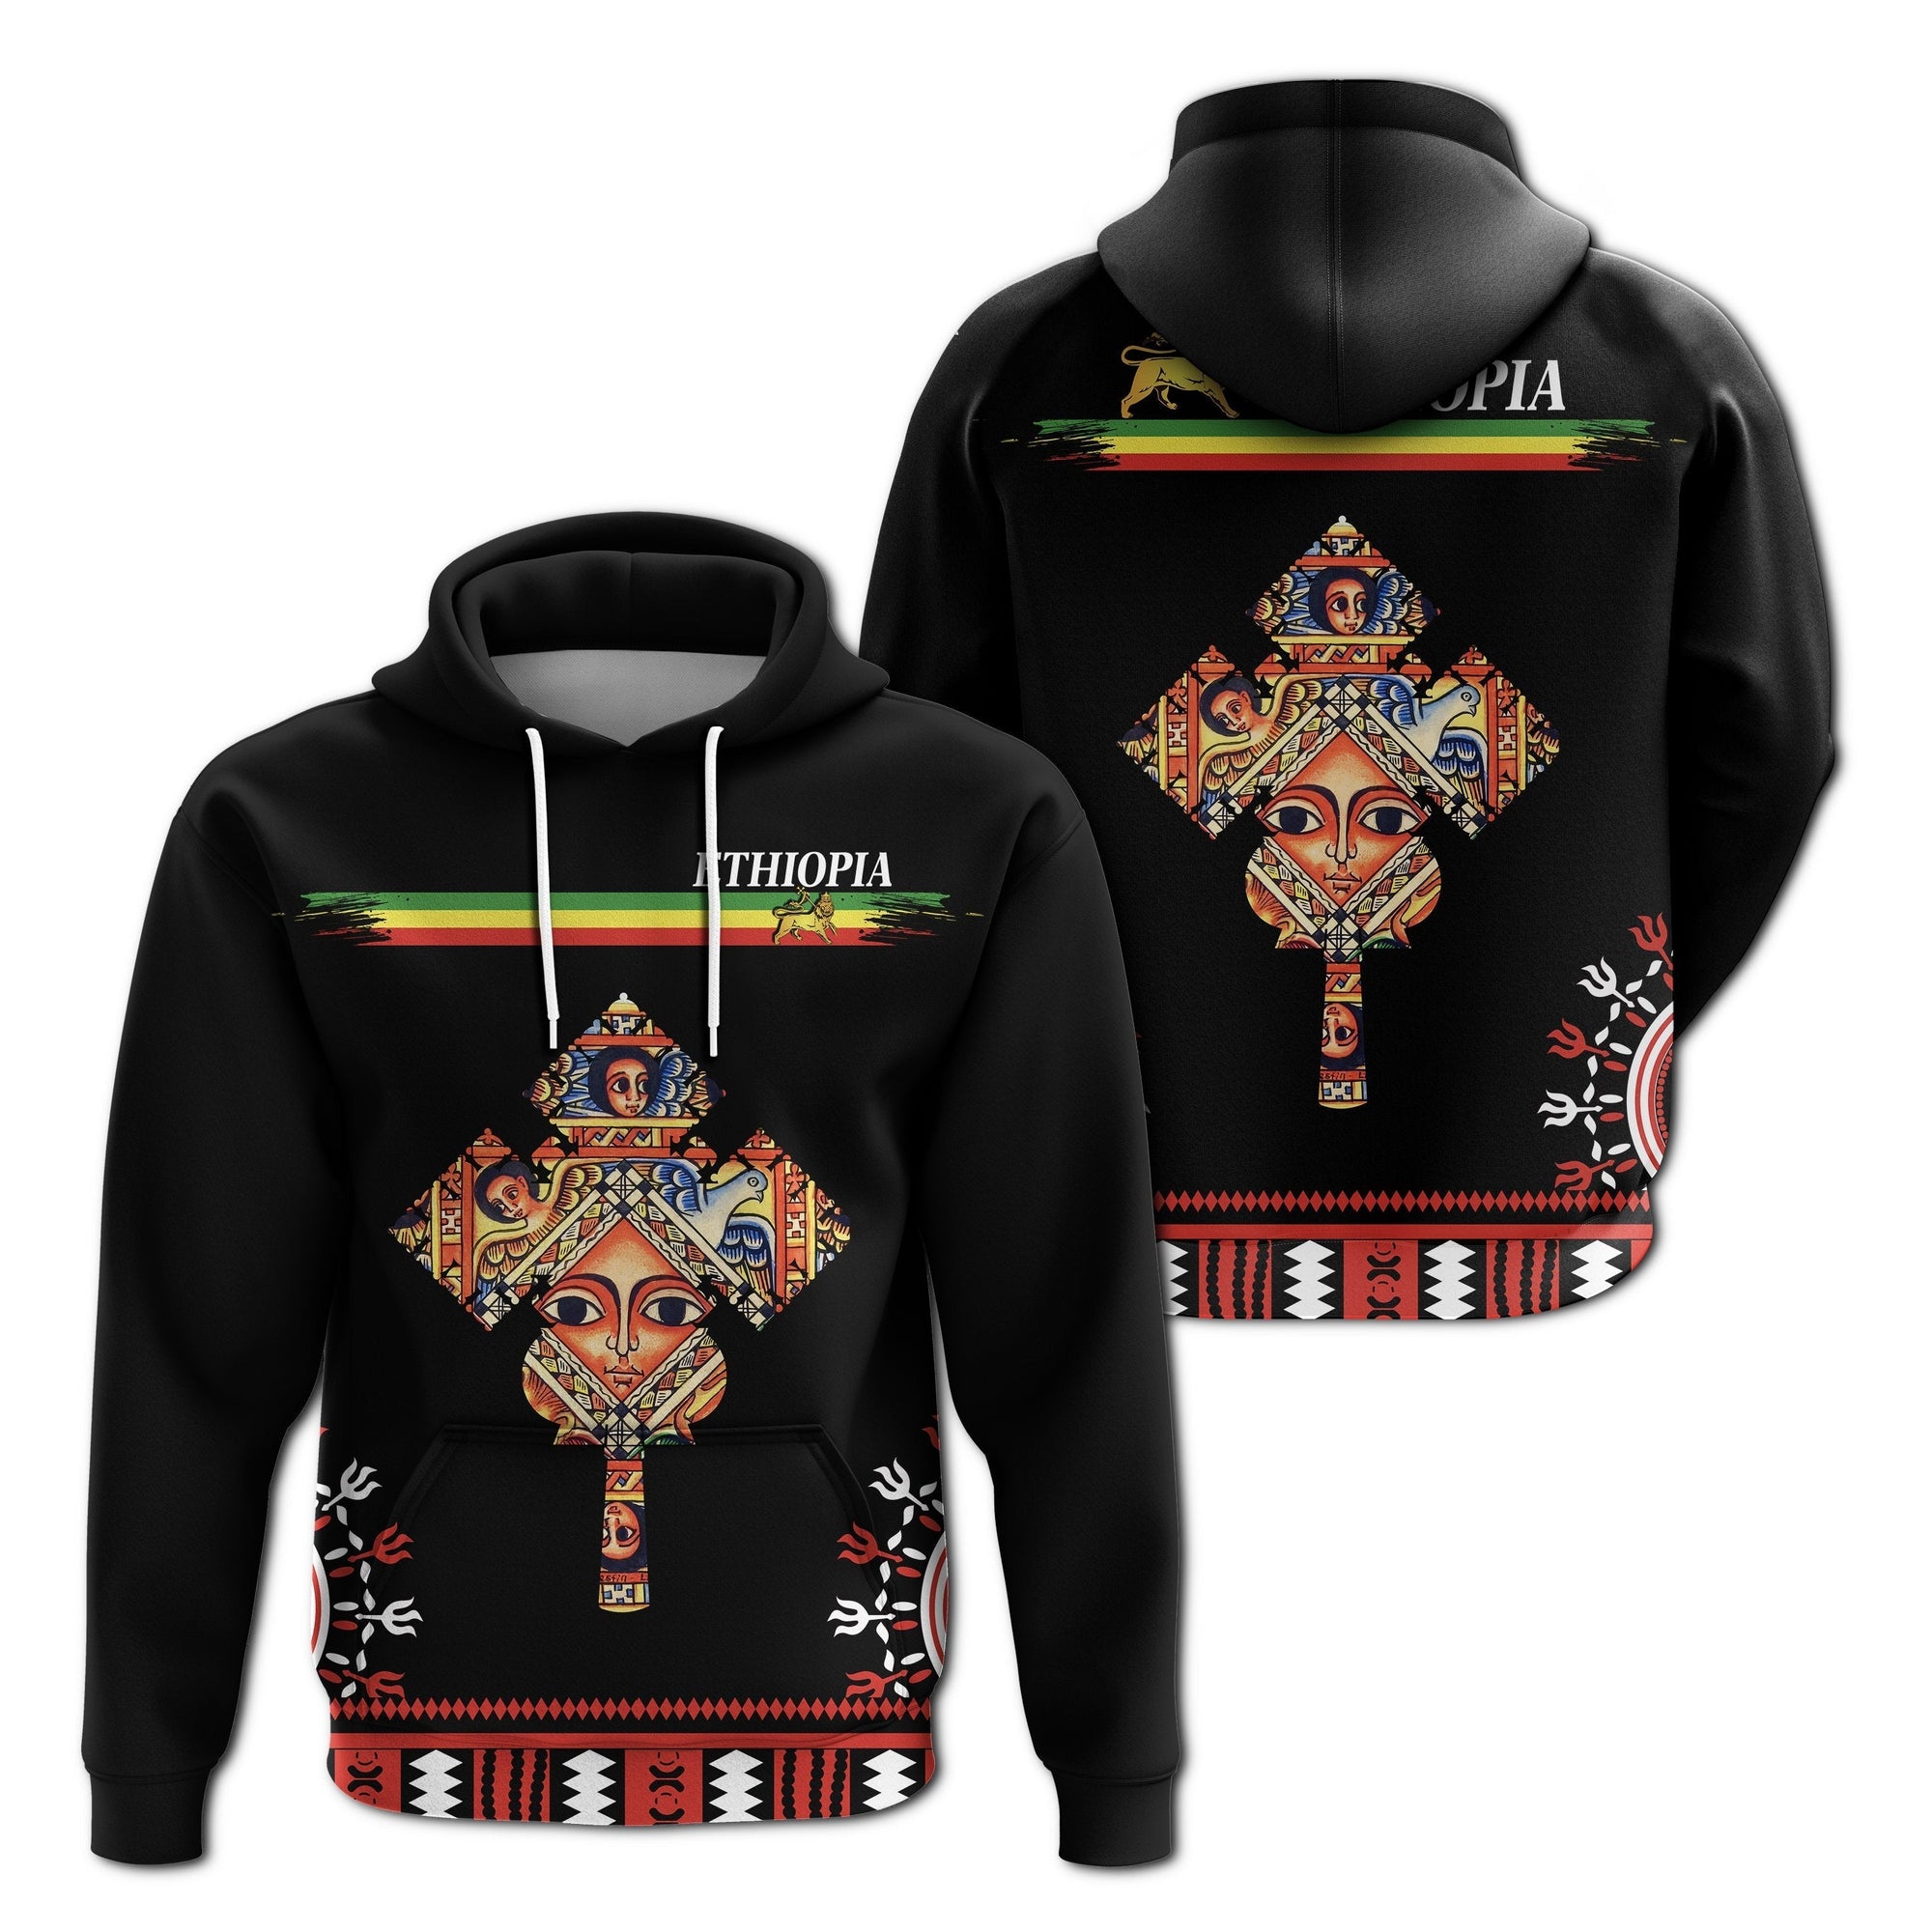 ethiopia-hoodie-ethiopian-cross